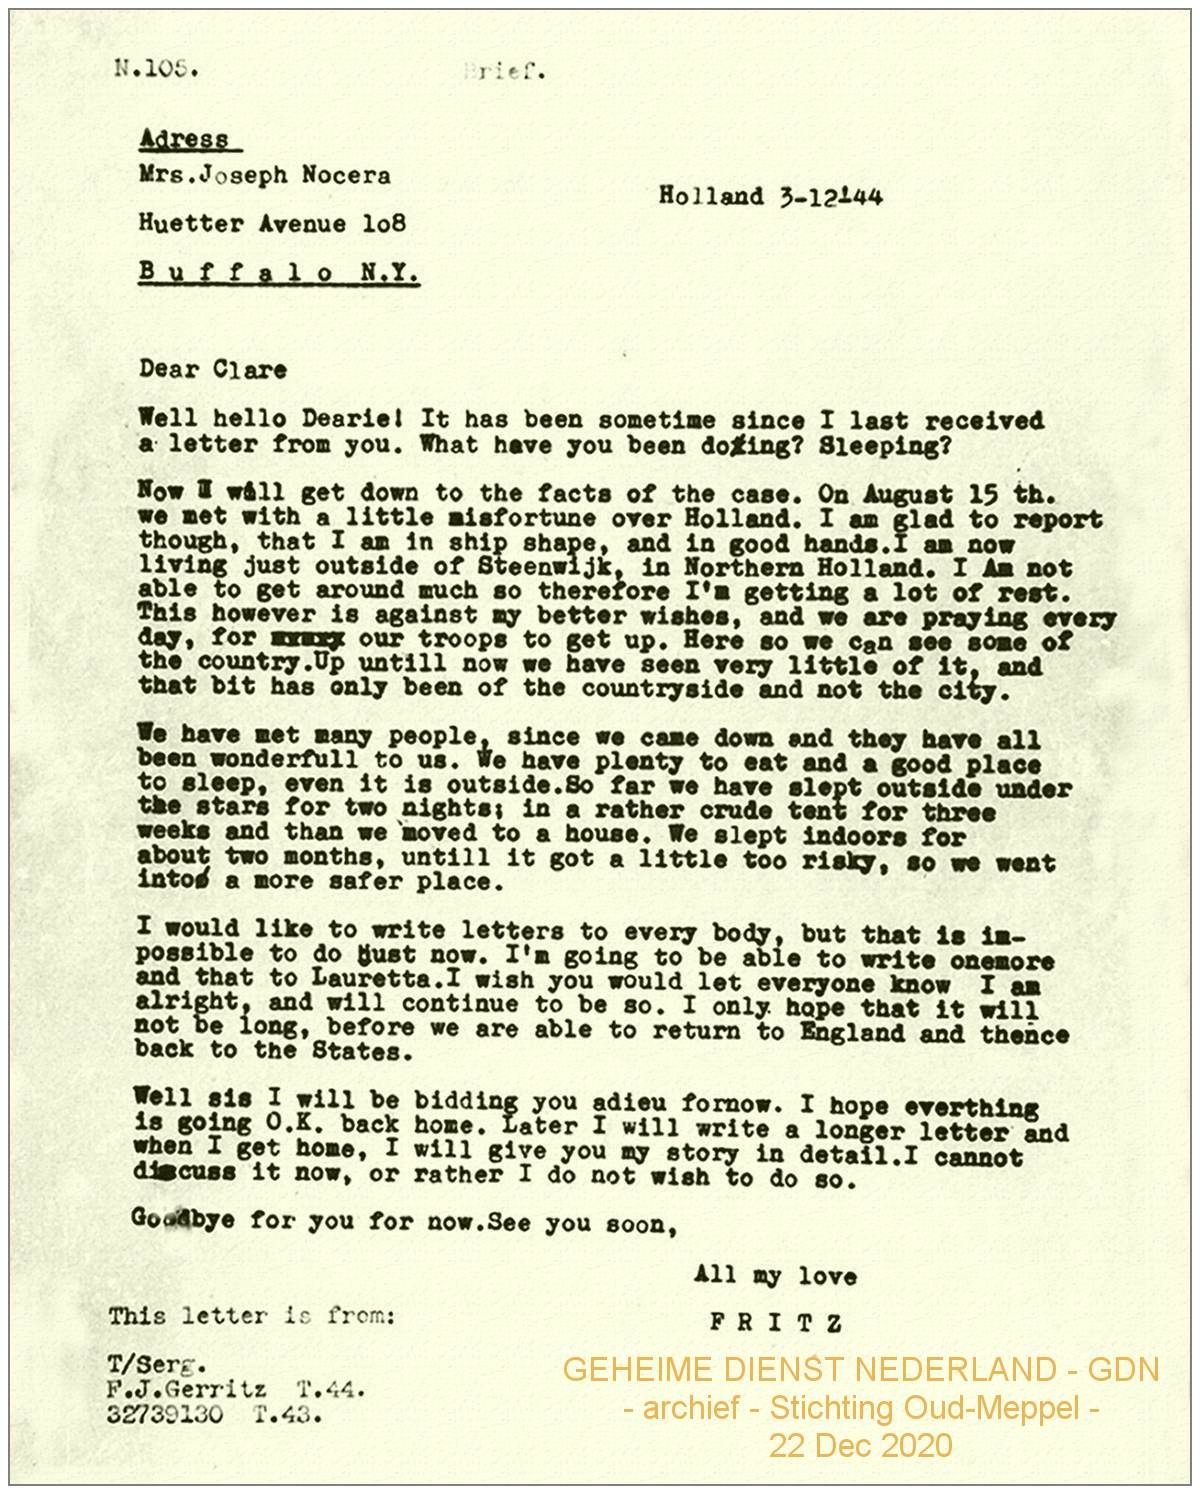 GDN - N.105 - letter 02 - 'Fritz' Fred Gerritz - Holland, 03 Dec 1944